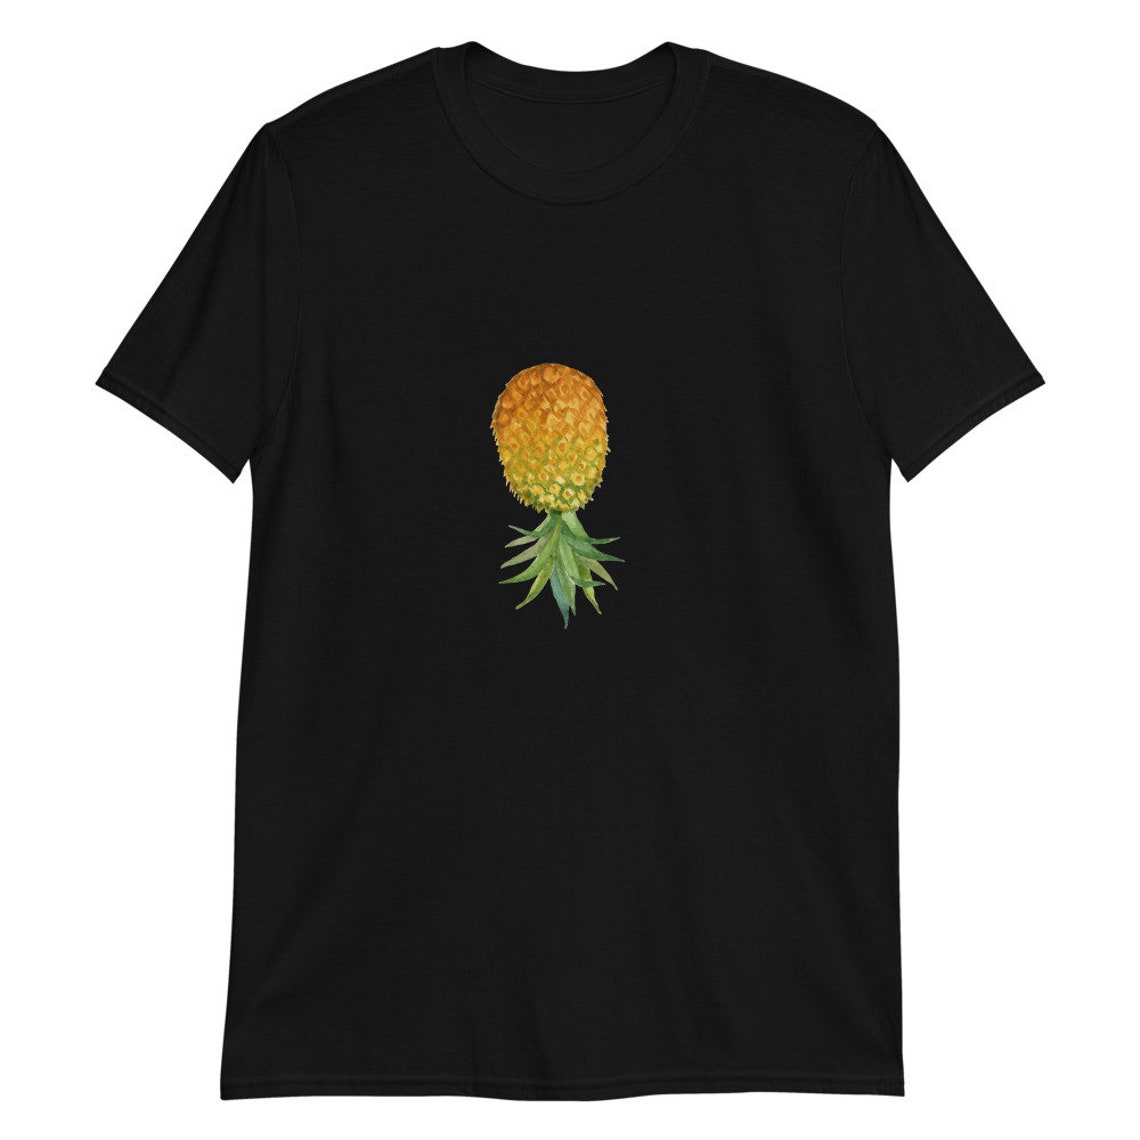 Upside Down Pineapple T-shirt/Hotwife/Hot wife/Hotwife | Etsy